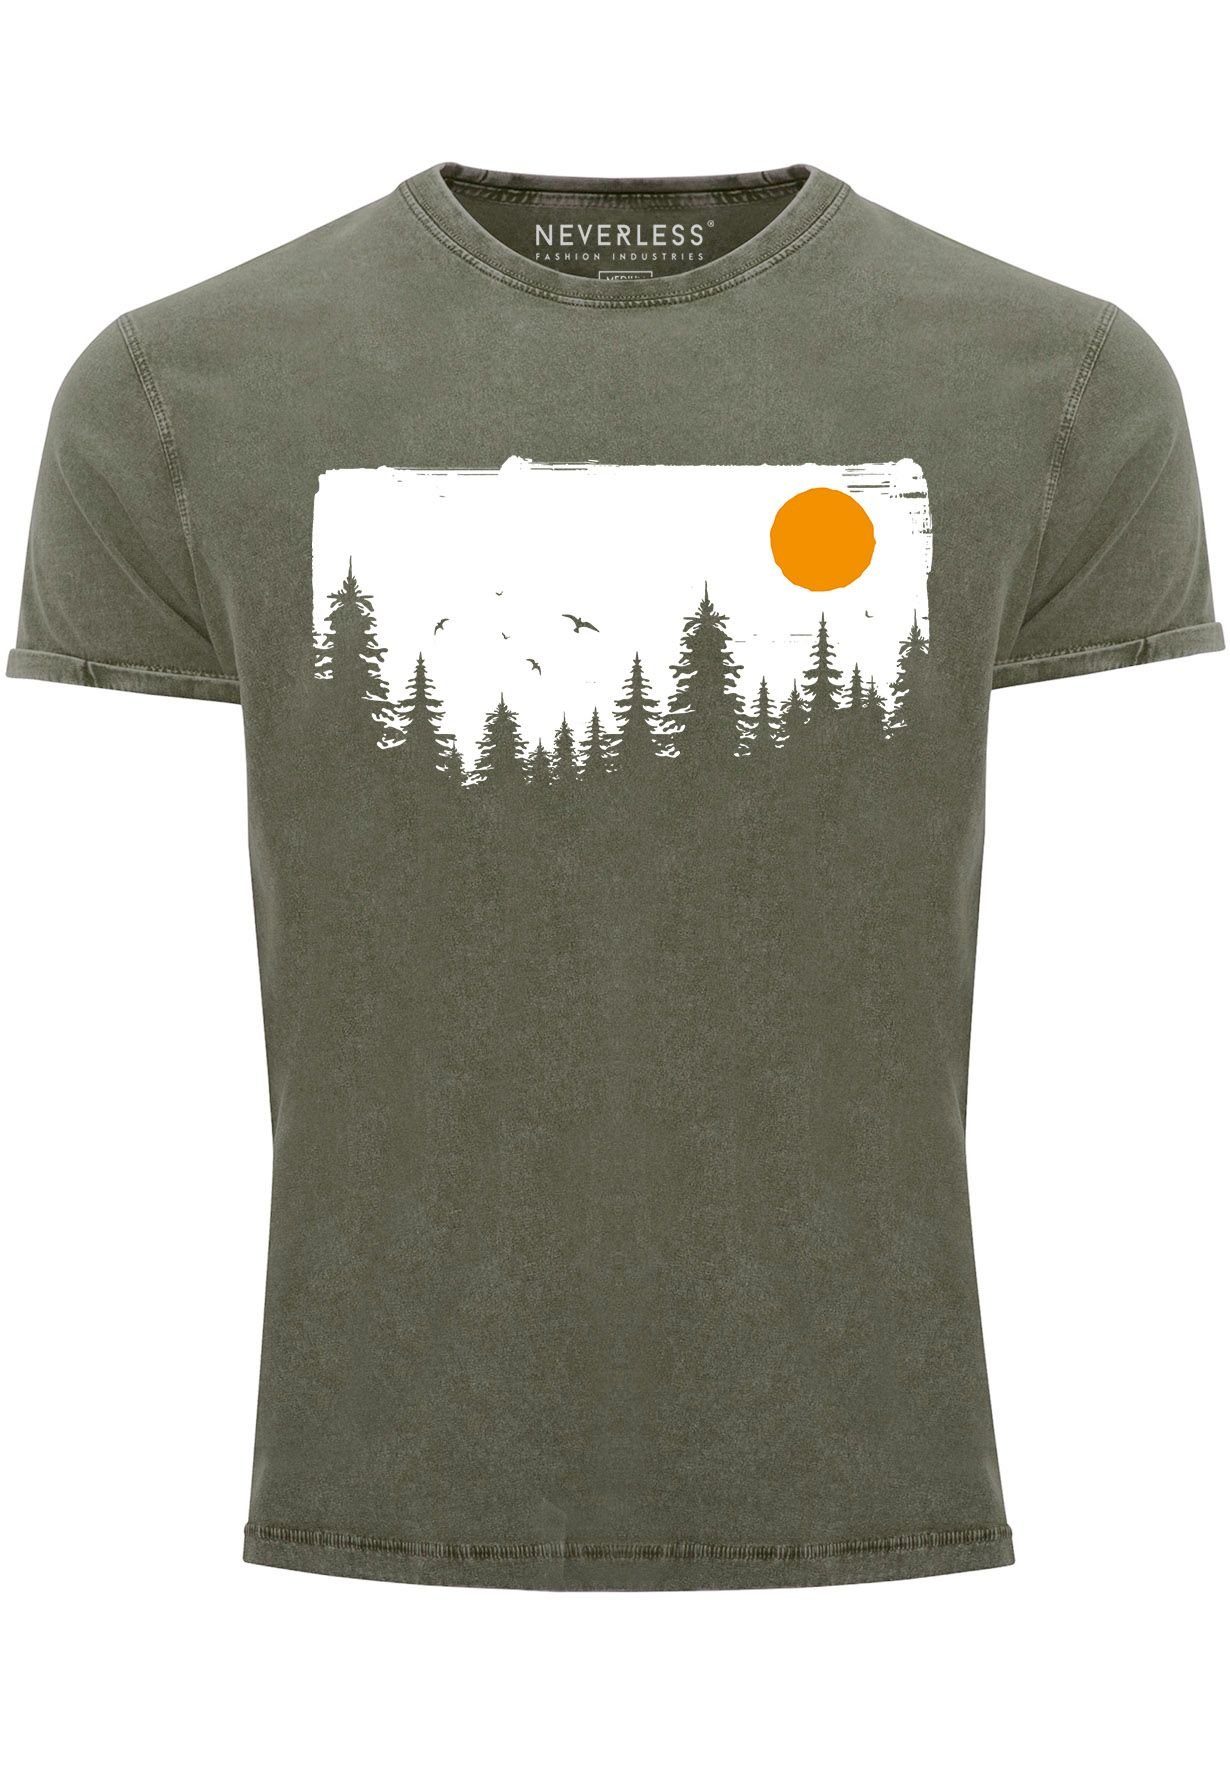 Neverless Print-Shirt Herren Vintage Shirt Wald Bäume Outdoor Adventure Abenteuer Natur-Lieb mit Print oliv